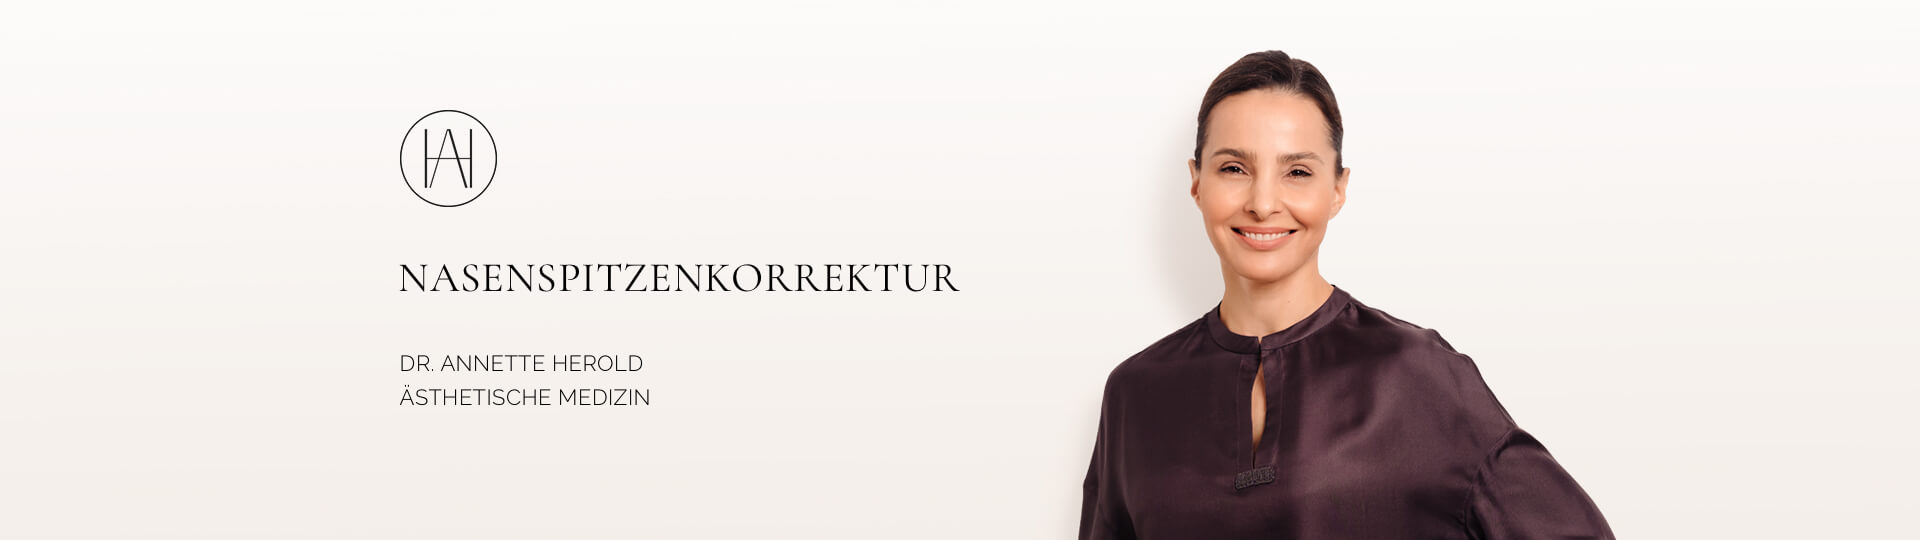 Nasenspitzenkorrektur Düsseldorf, Dr. Annette Herold, Aesthetics Redefined 